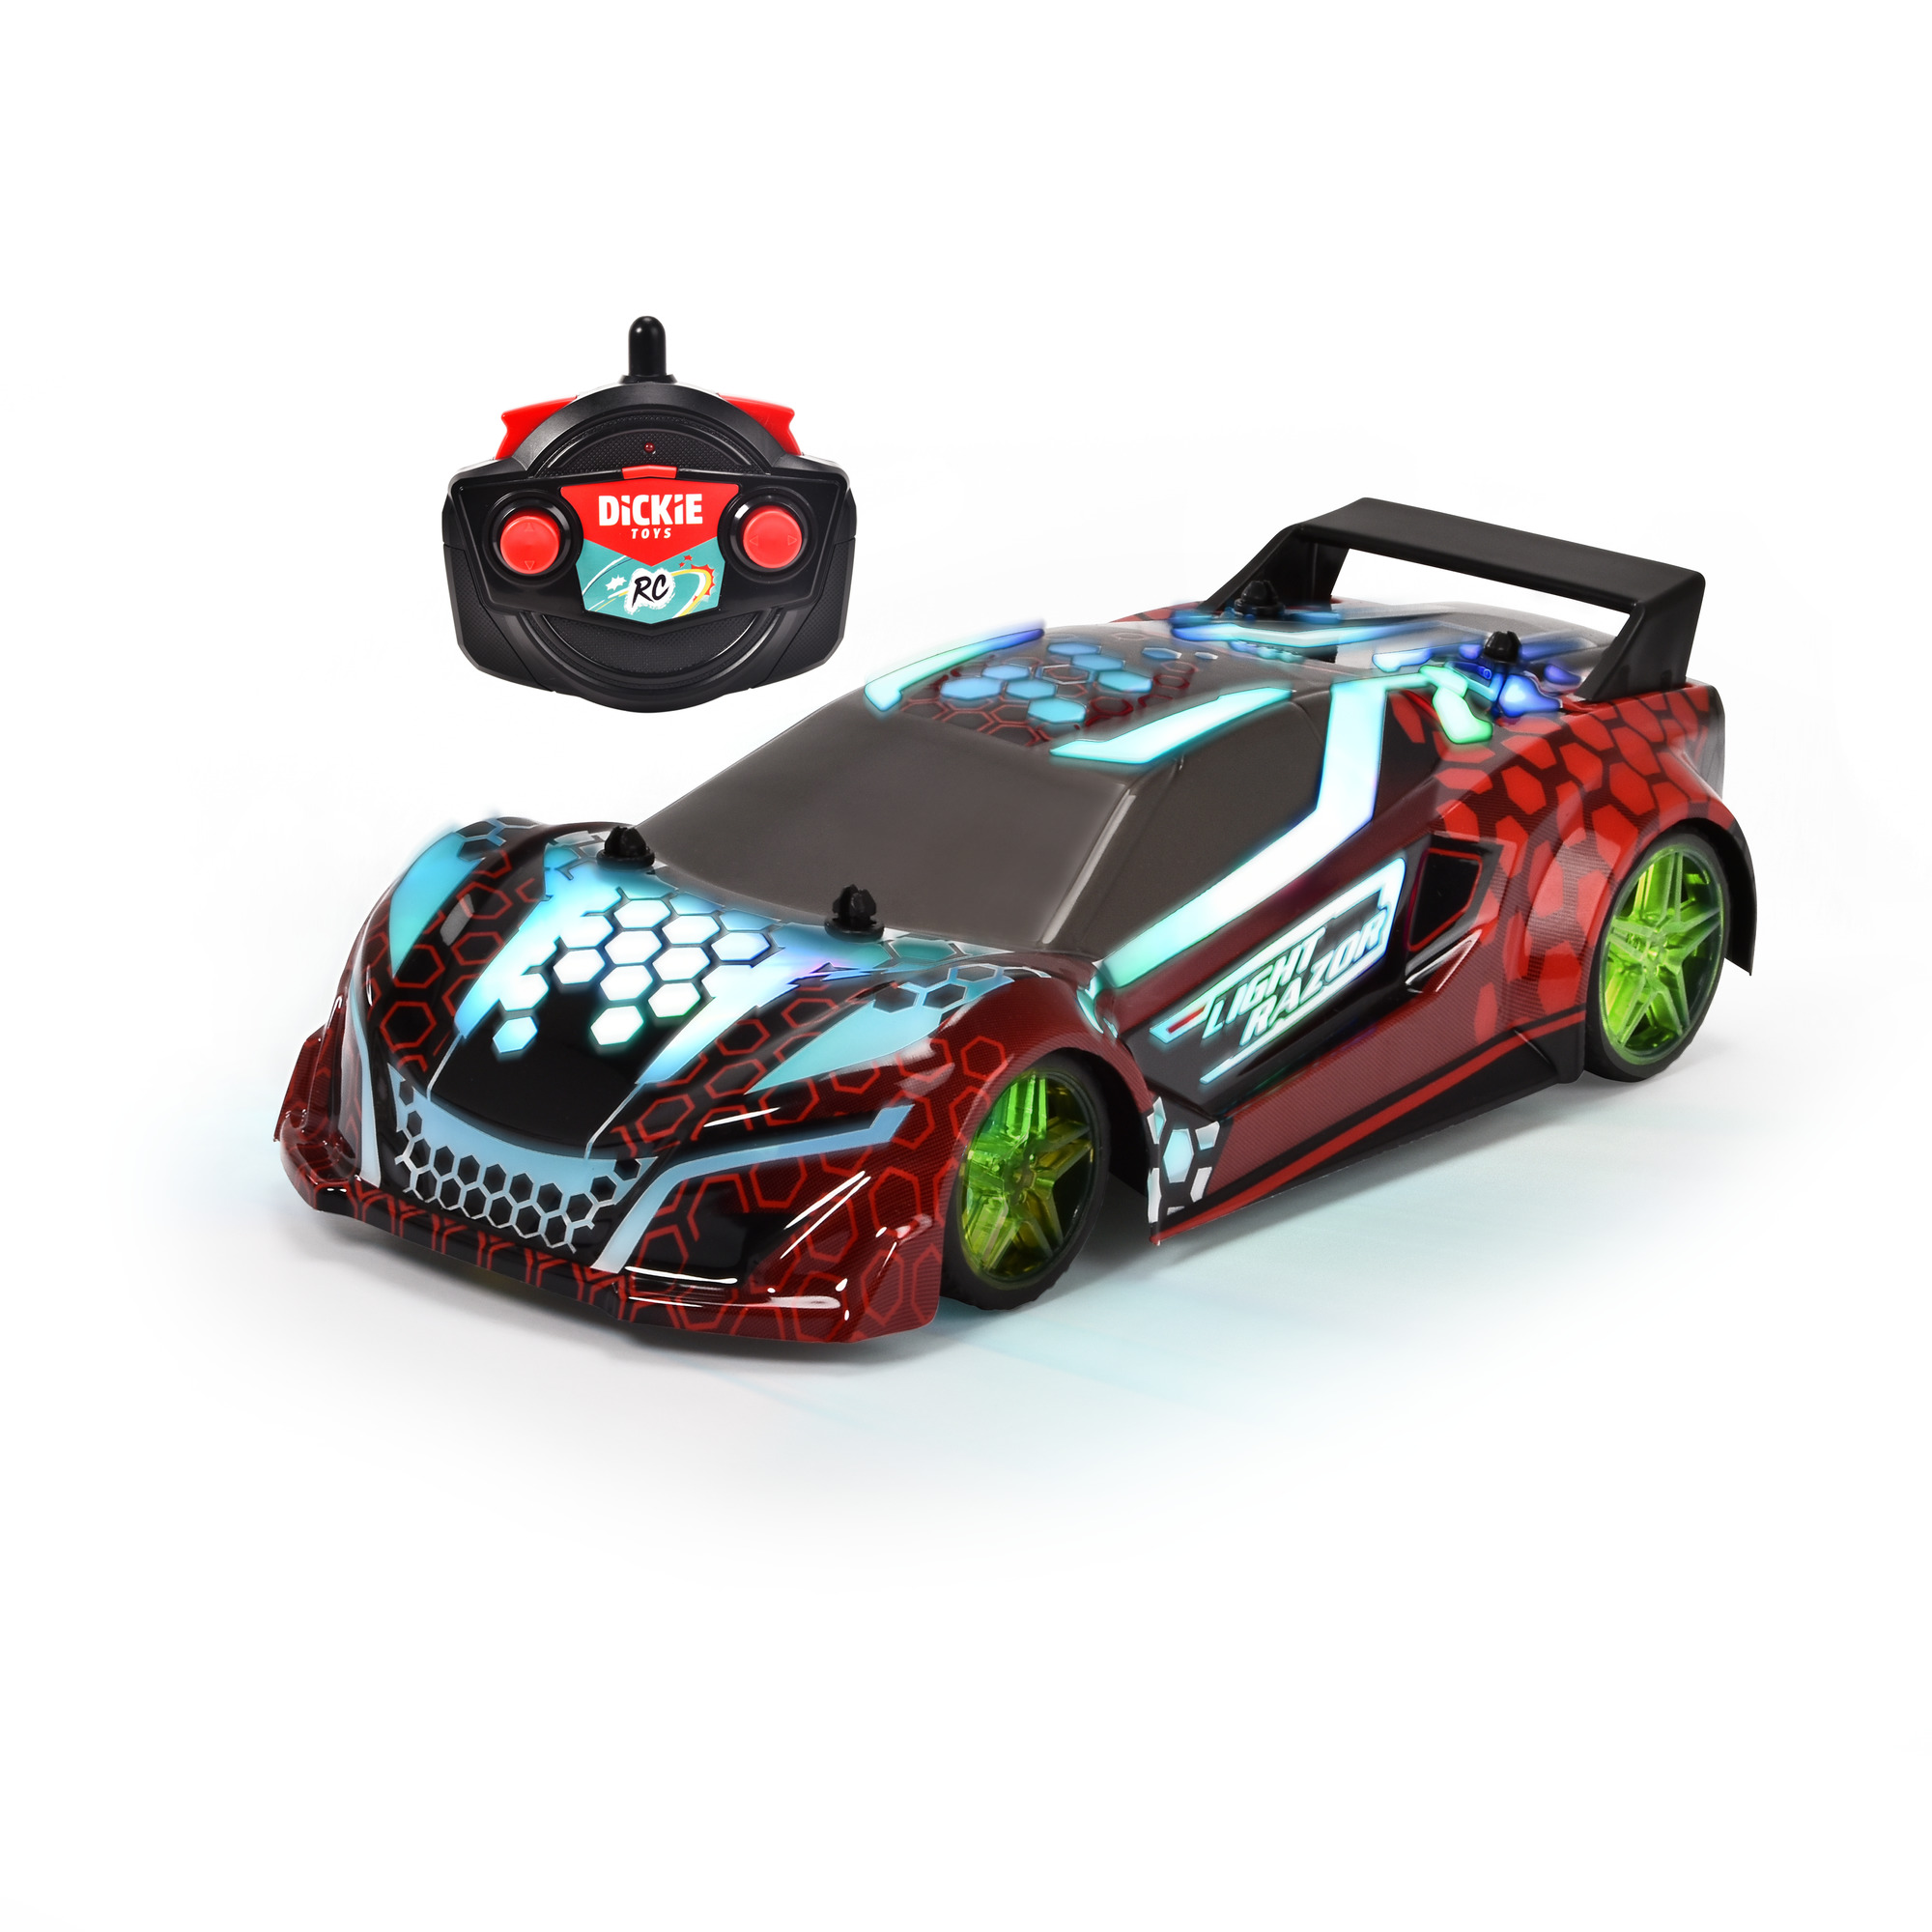 Mehrfarbig Razor Spielzeugauto R/C DICKIE-TOYS Light R/C